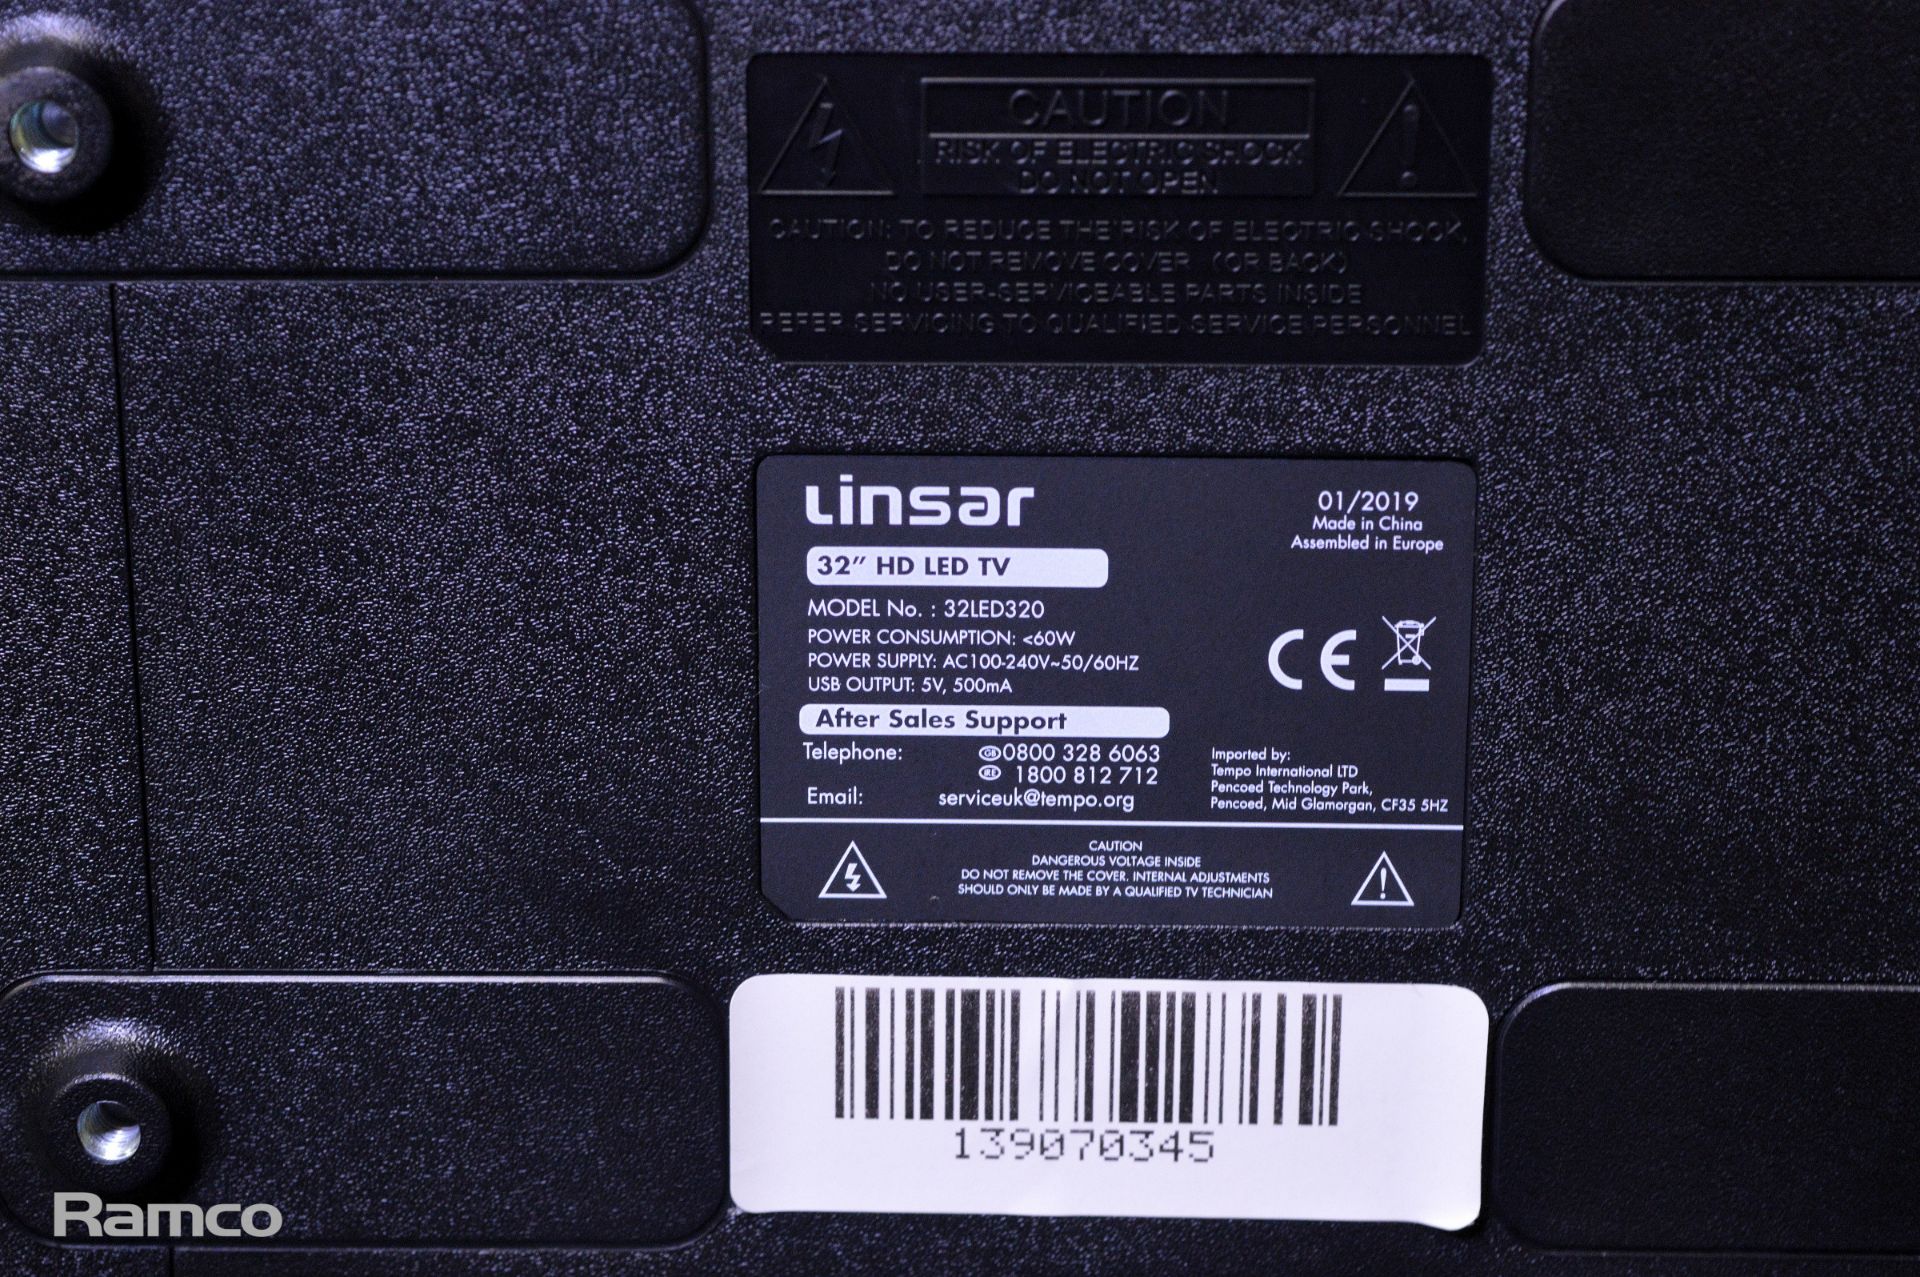 Linsar 32 inch HD LED TV - 32LED320 - Image 3 of 3